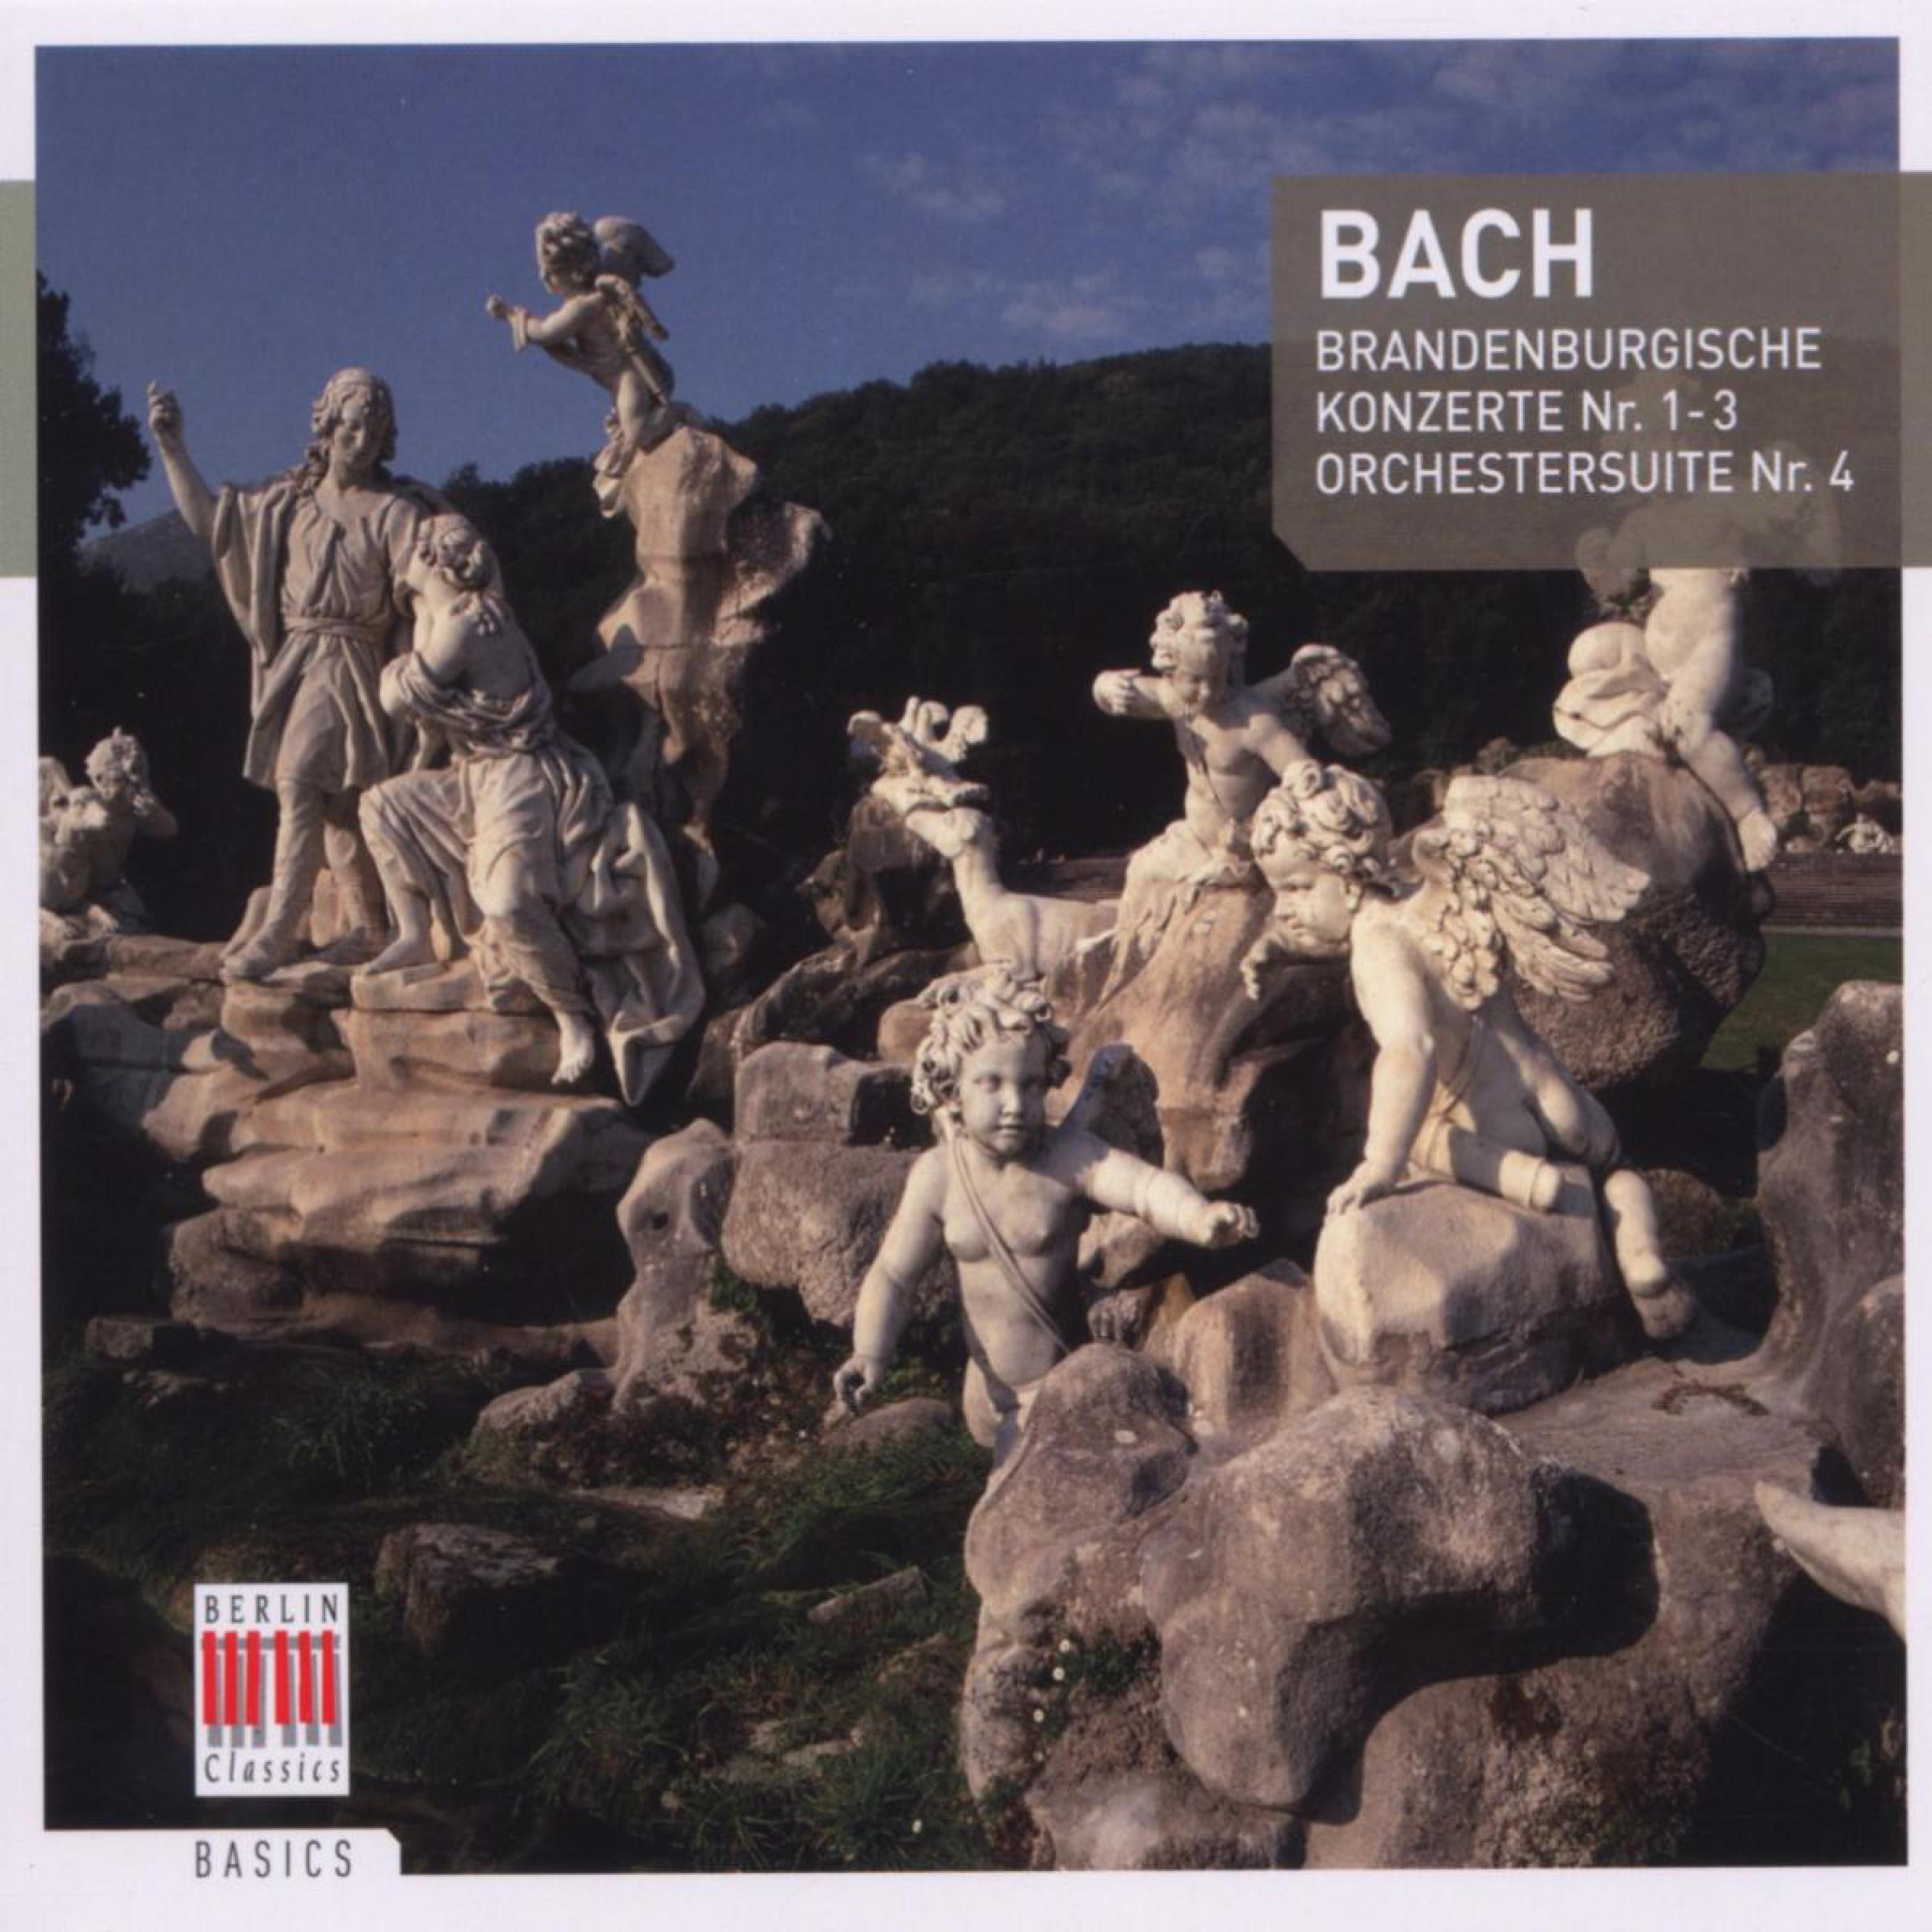 Brandenburg Concerto No. 3 in G-Dur, BWV 1048: I. Allegro